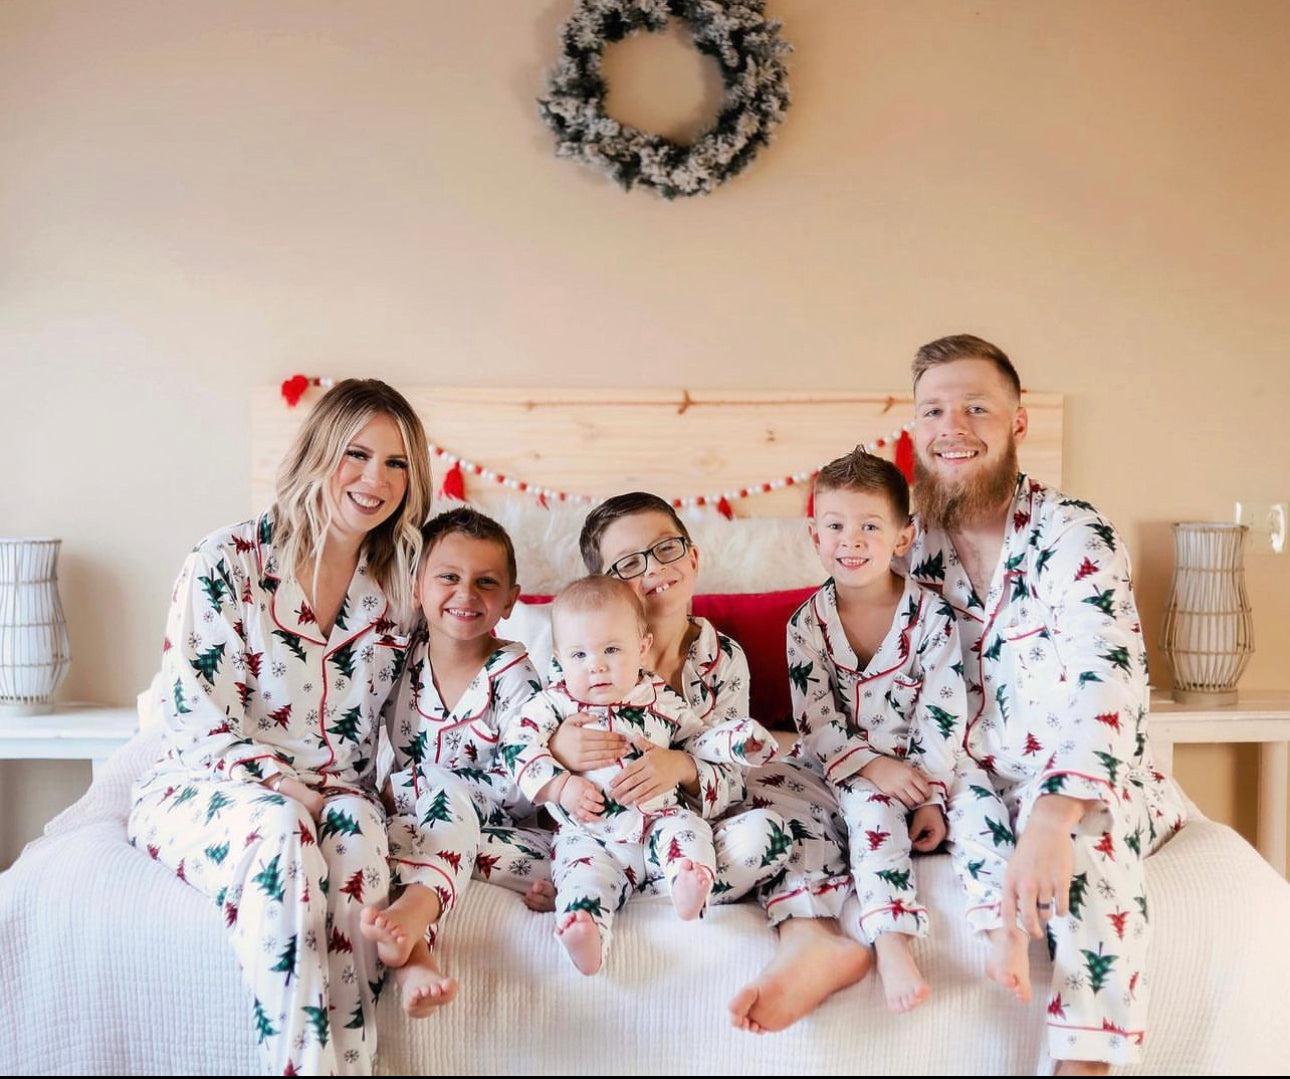 Family & Pet Buffalo Plaid Pajama Set - White